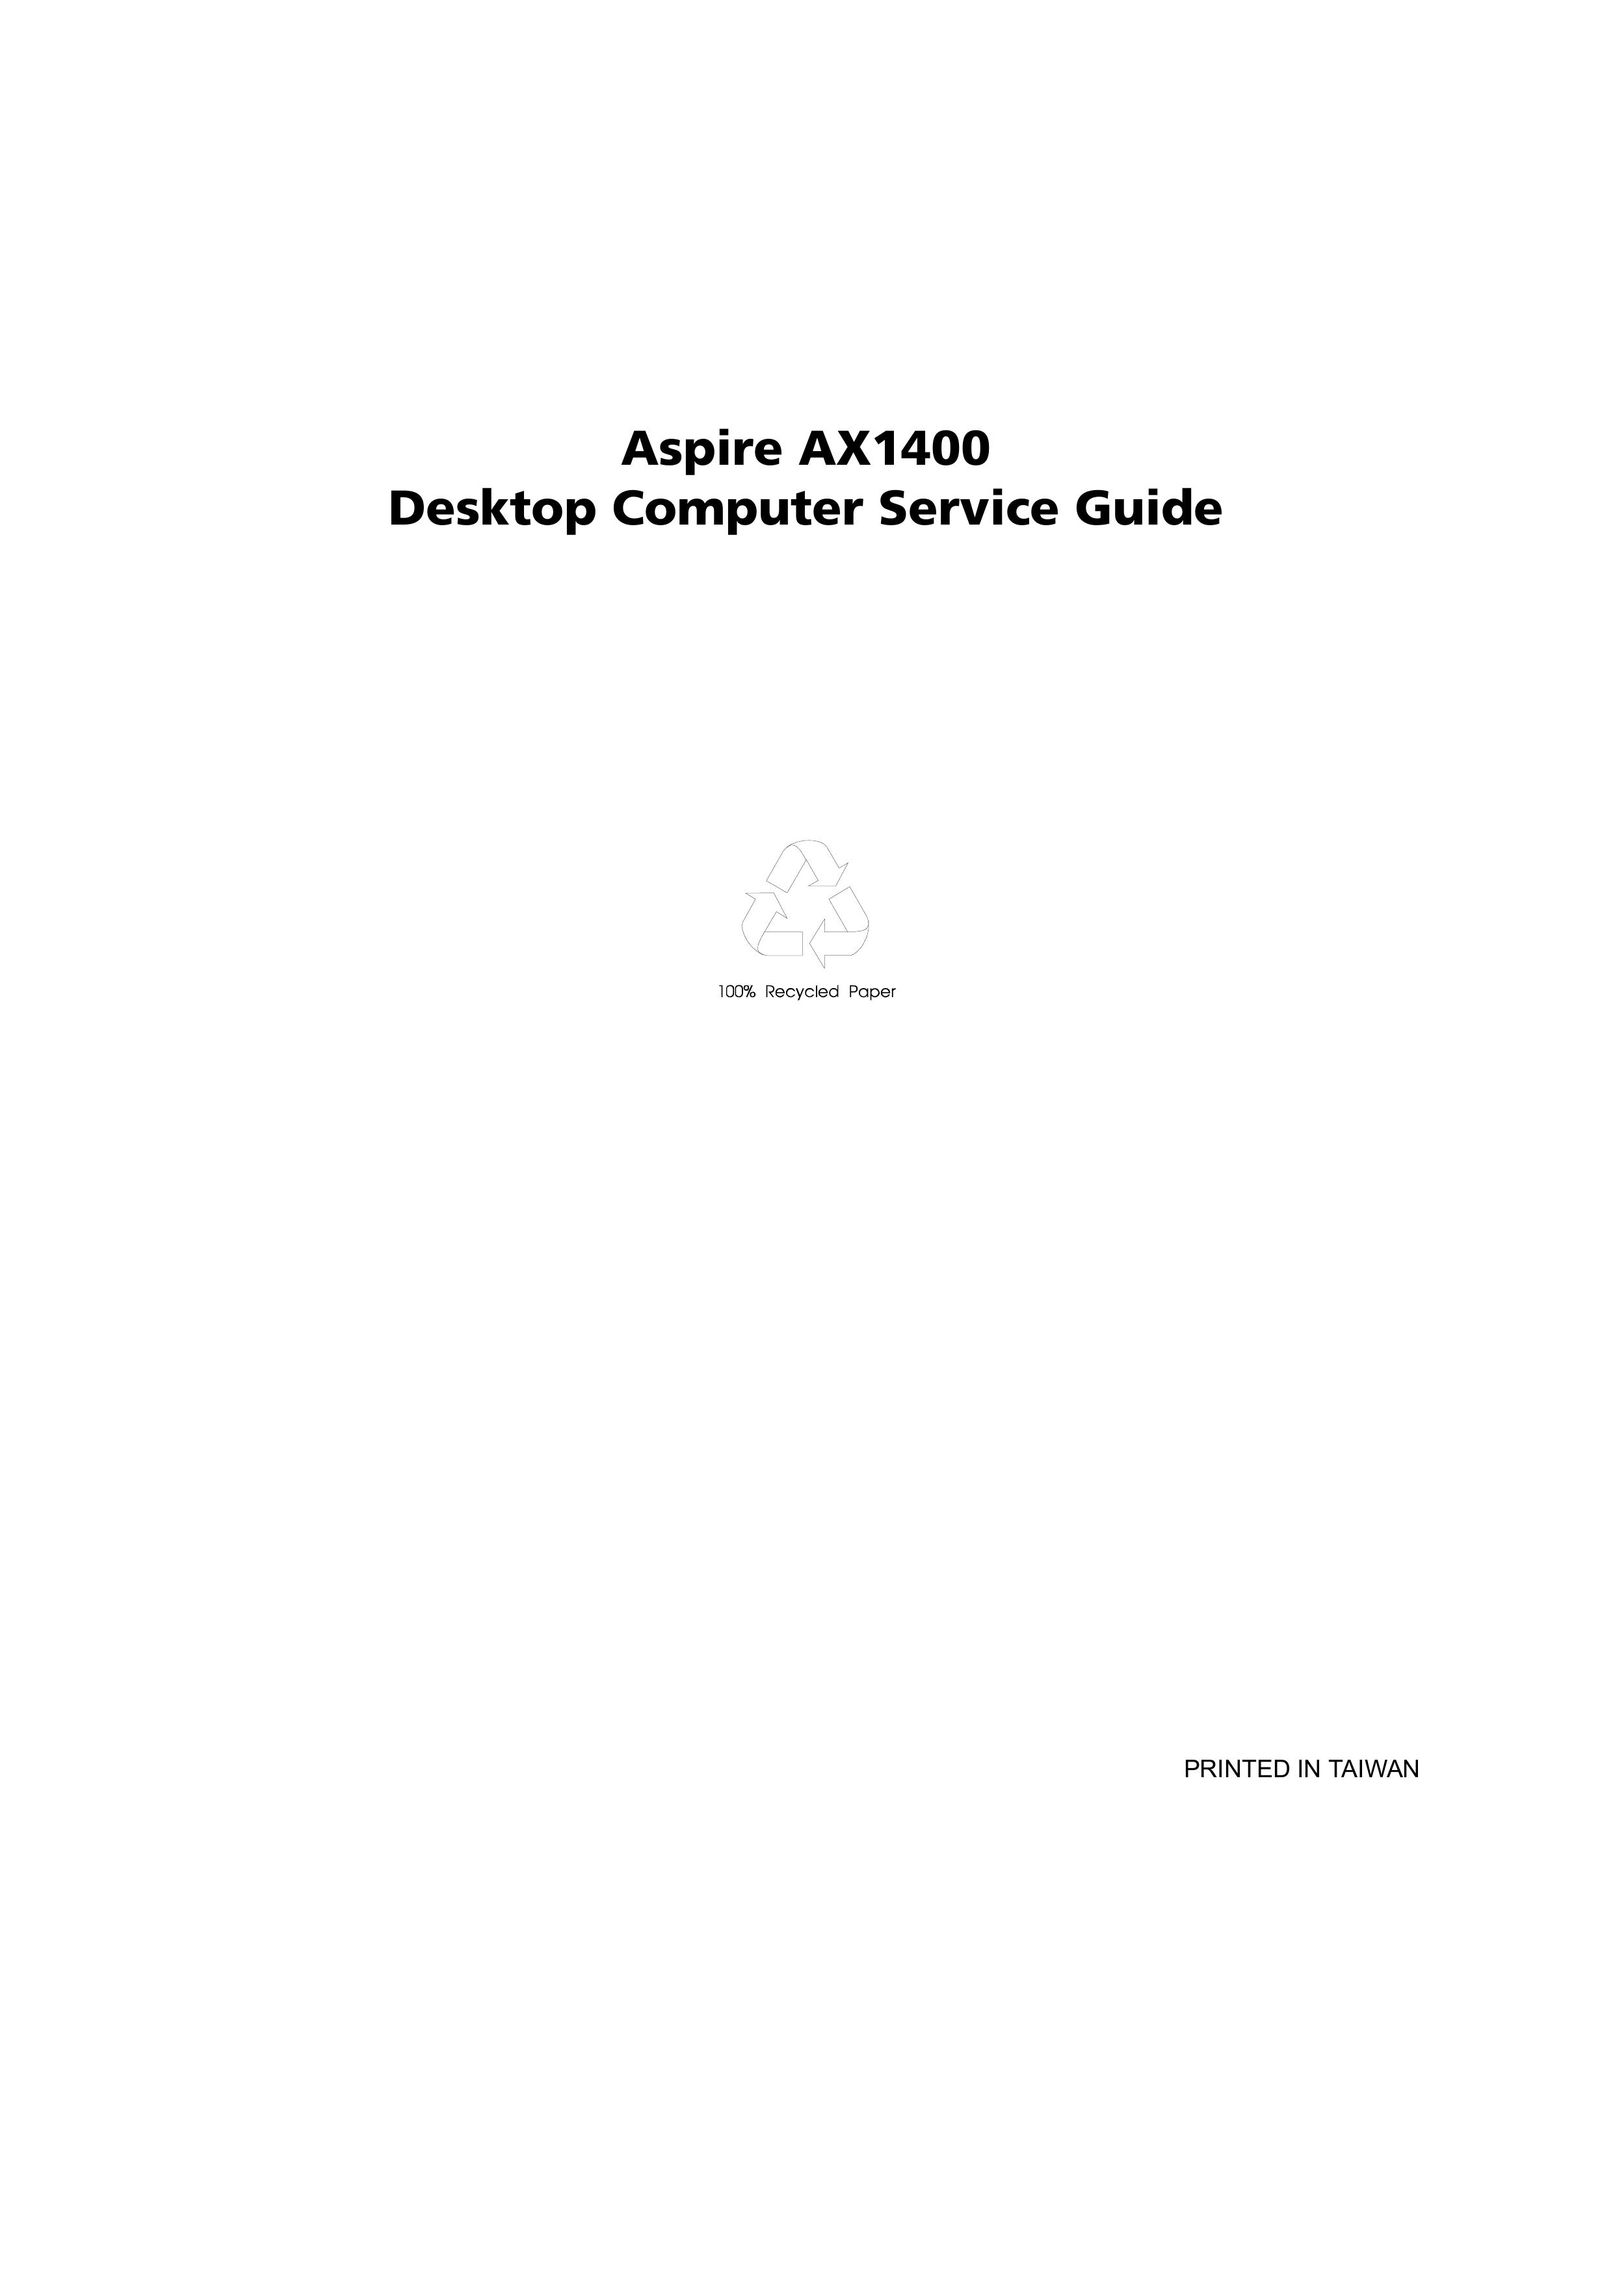 Aspire Digital AX1400 Personal Computer User Manual